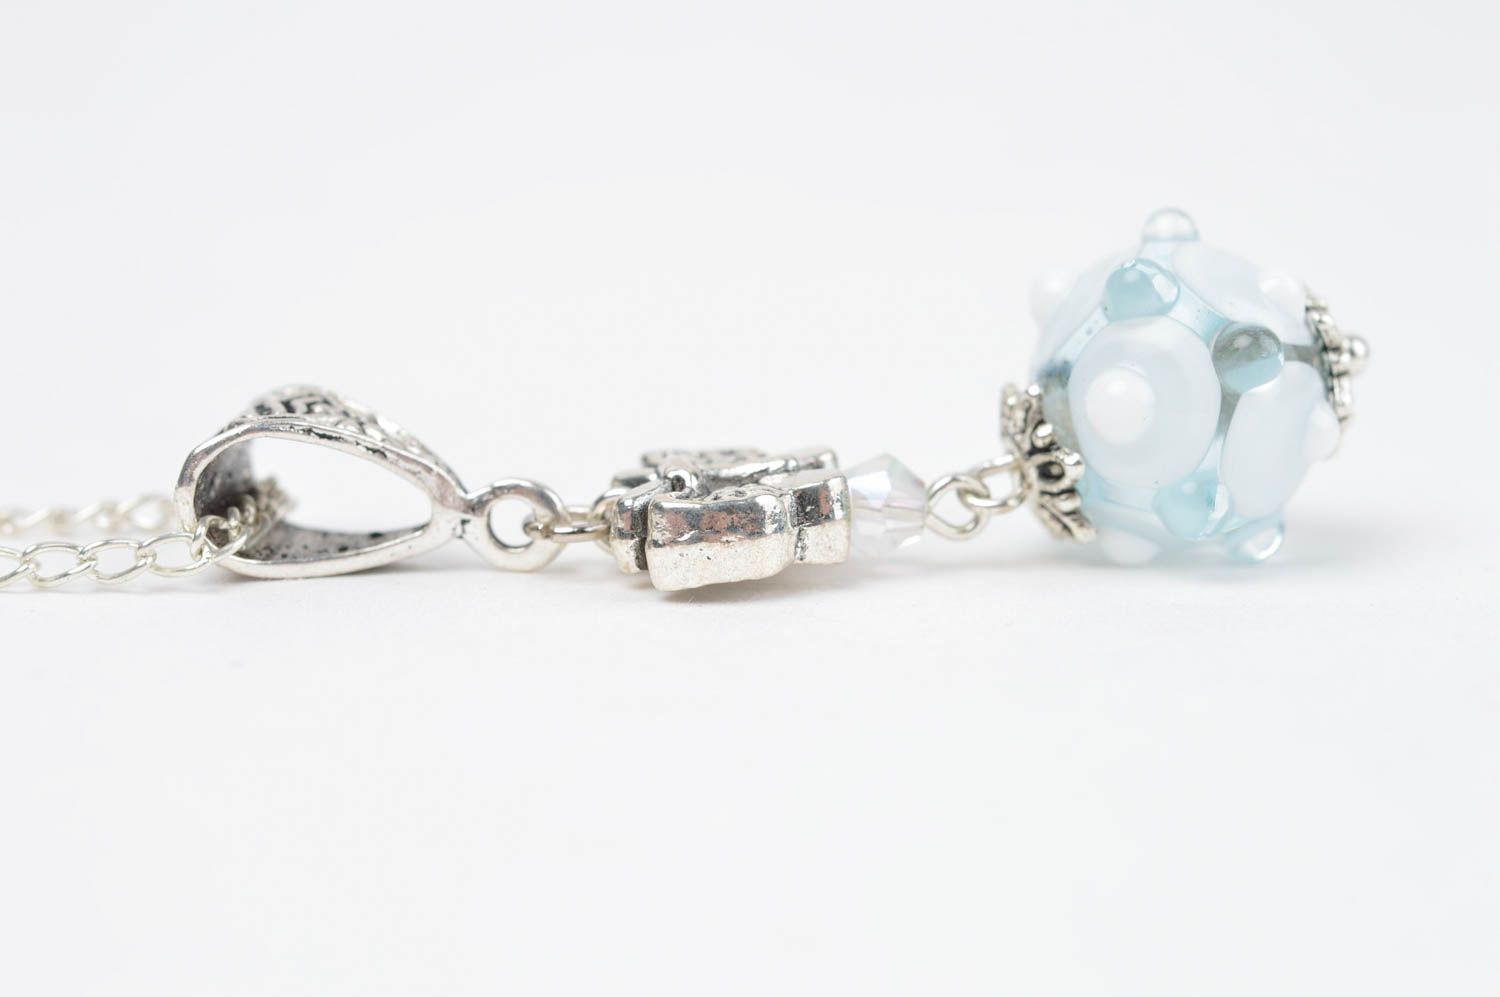 Beautiful handmade glass pendant neck pendant design lampwork pendant gift ideas photo 3